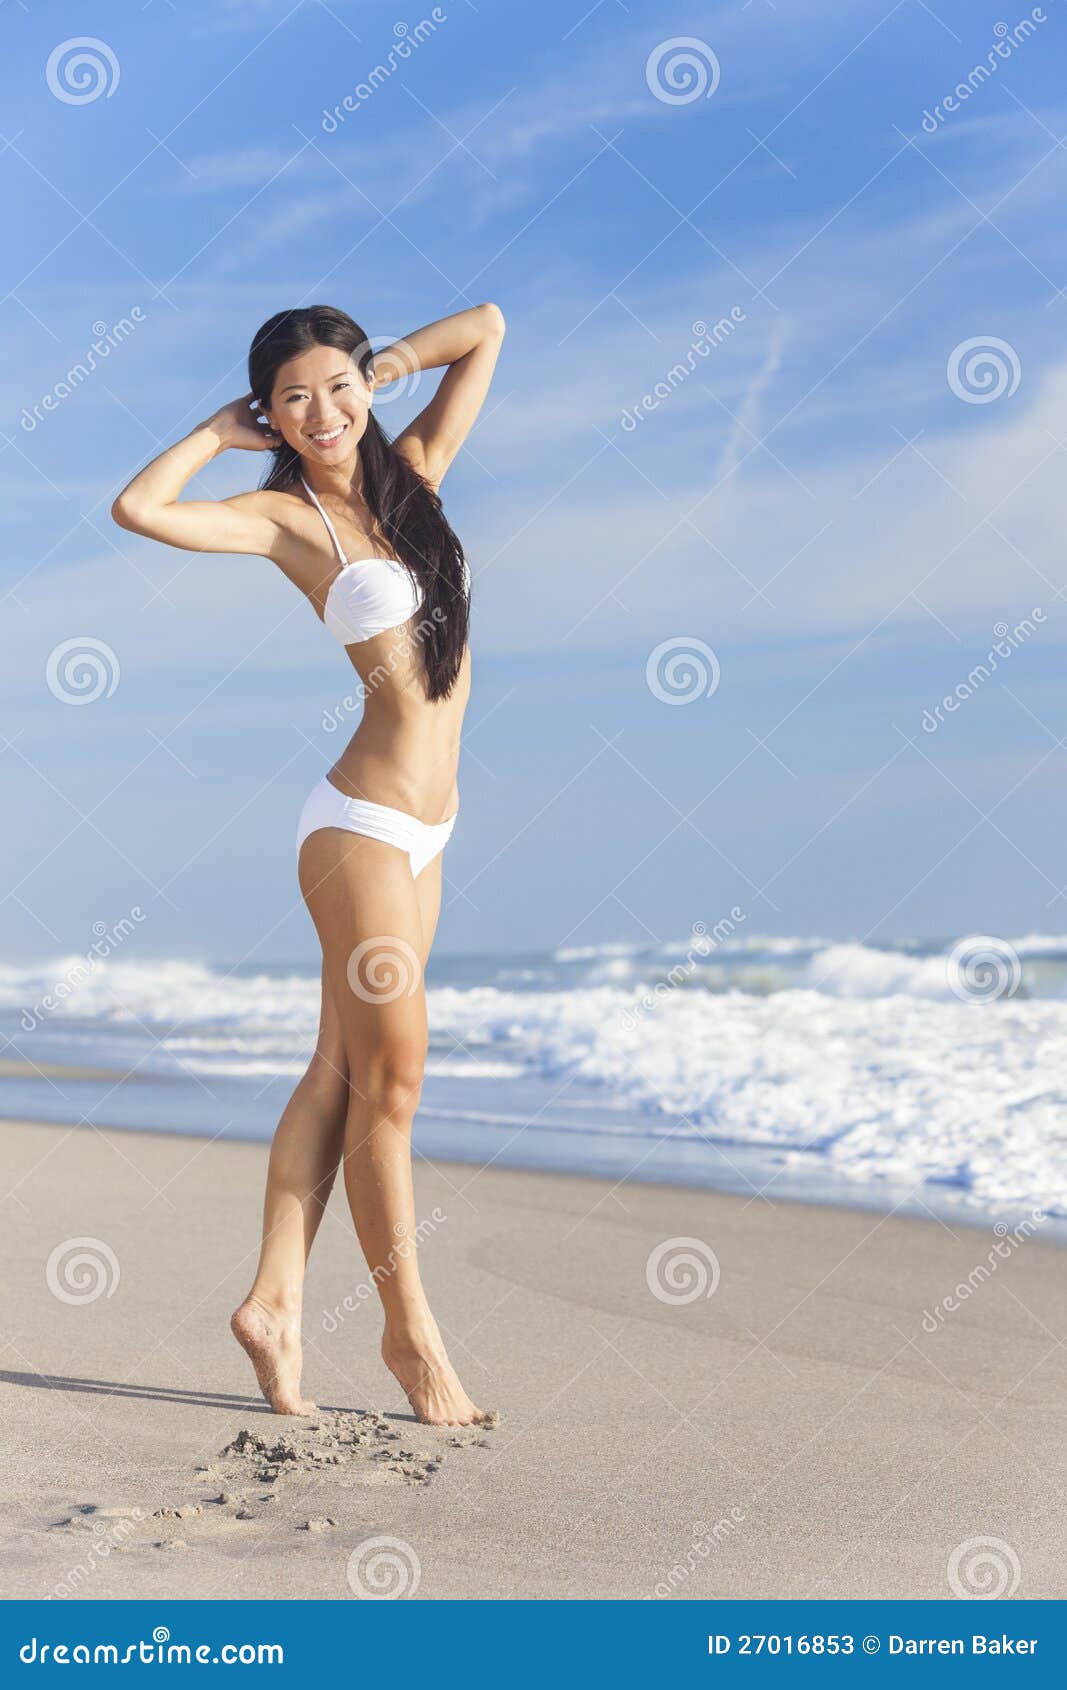 Nude teens beach